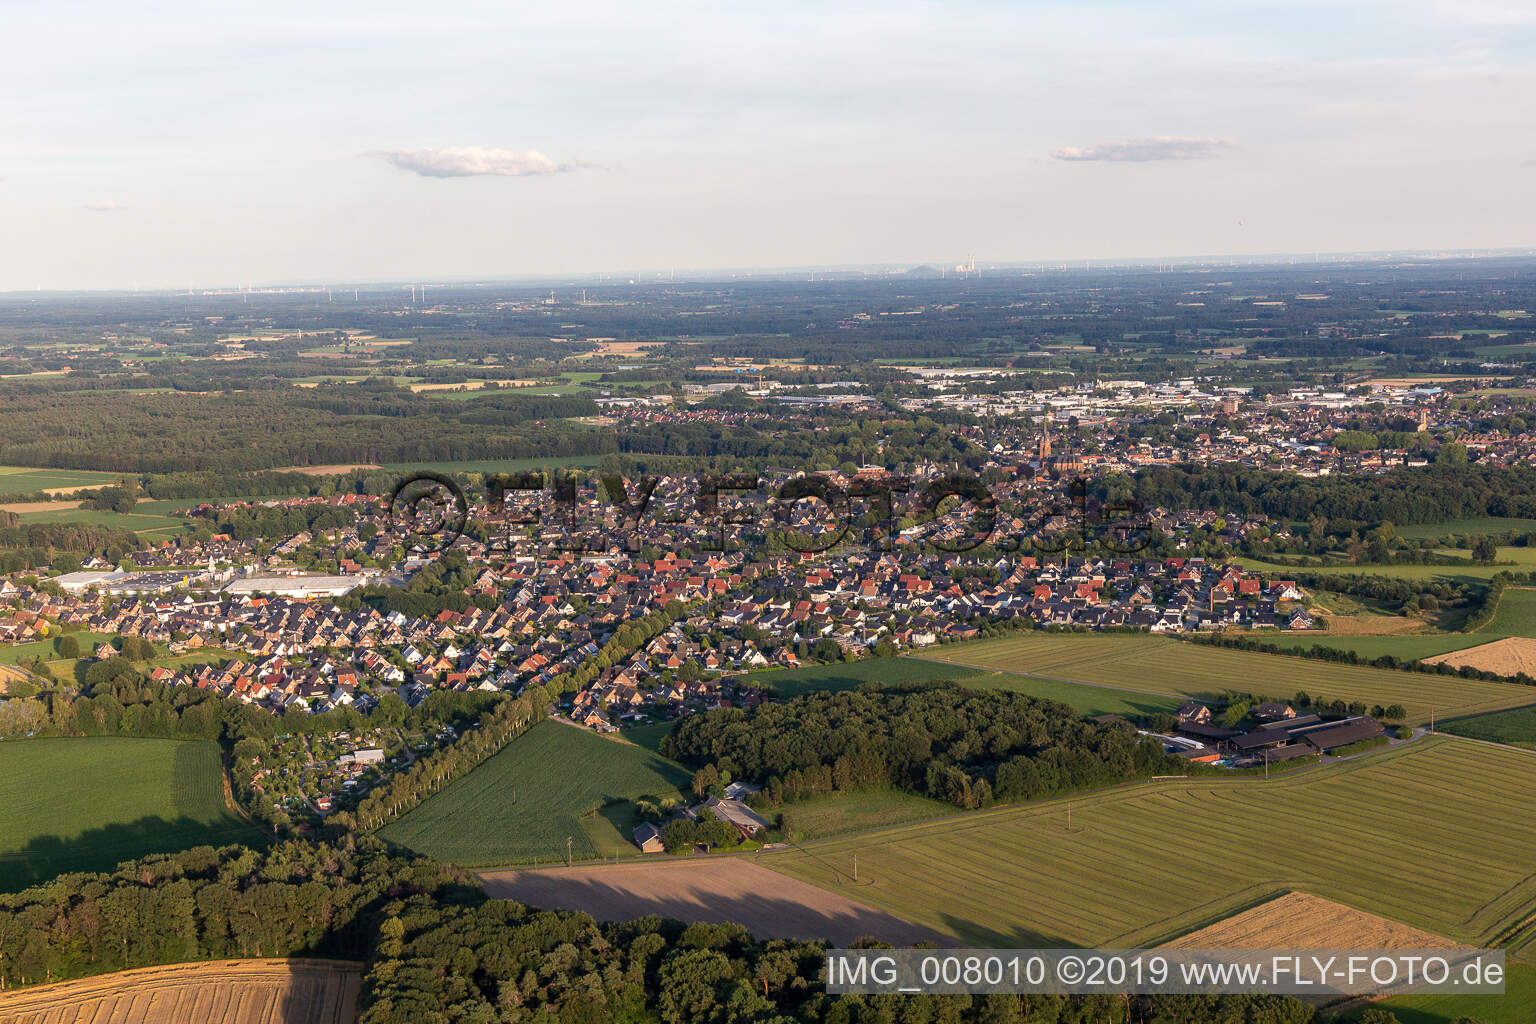 Aerial view of Rhede in the state North Rhine-Westphalia, Germany